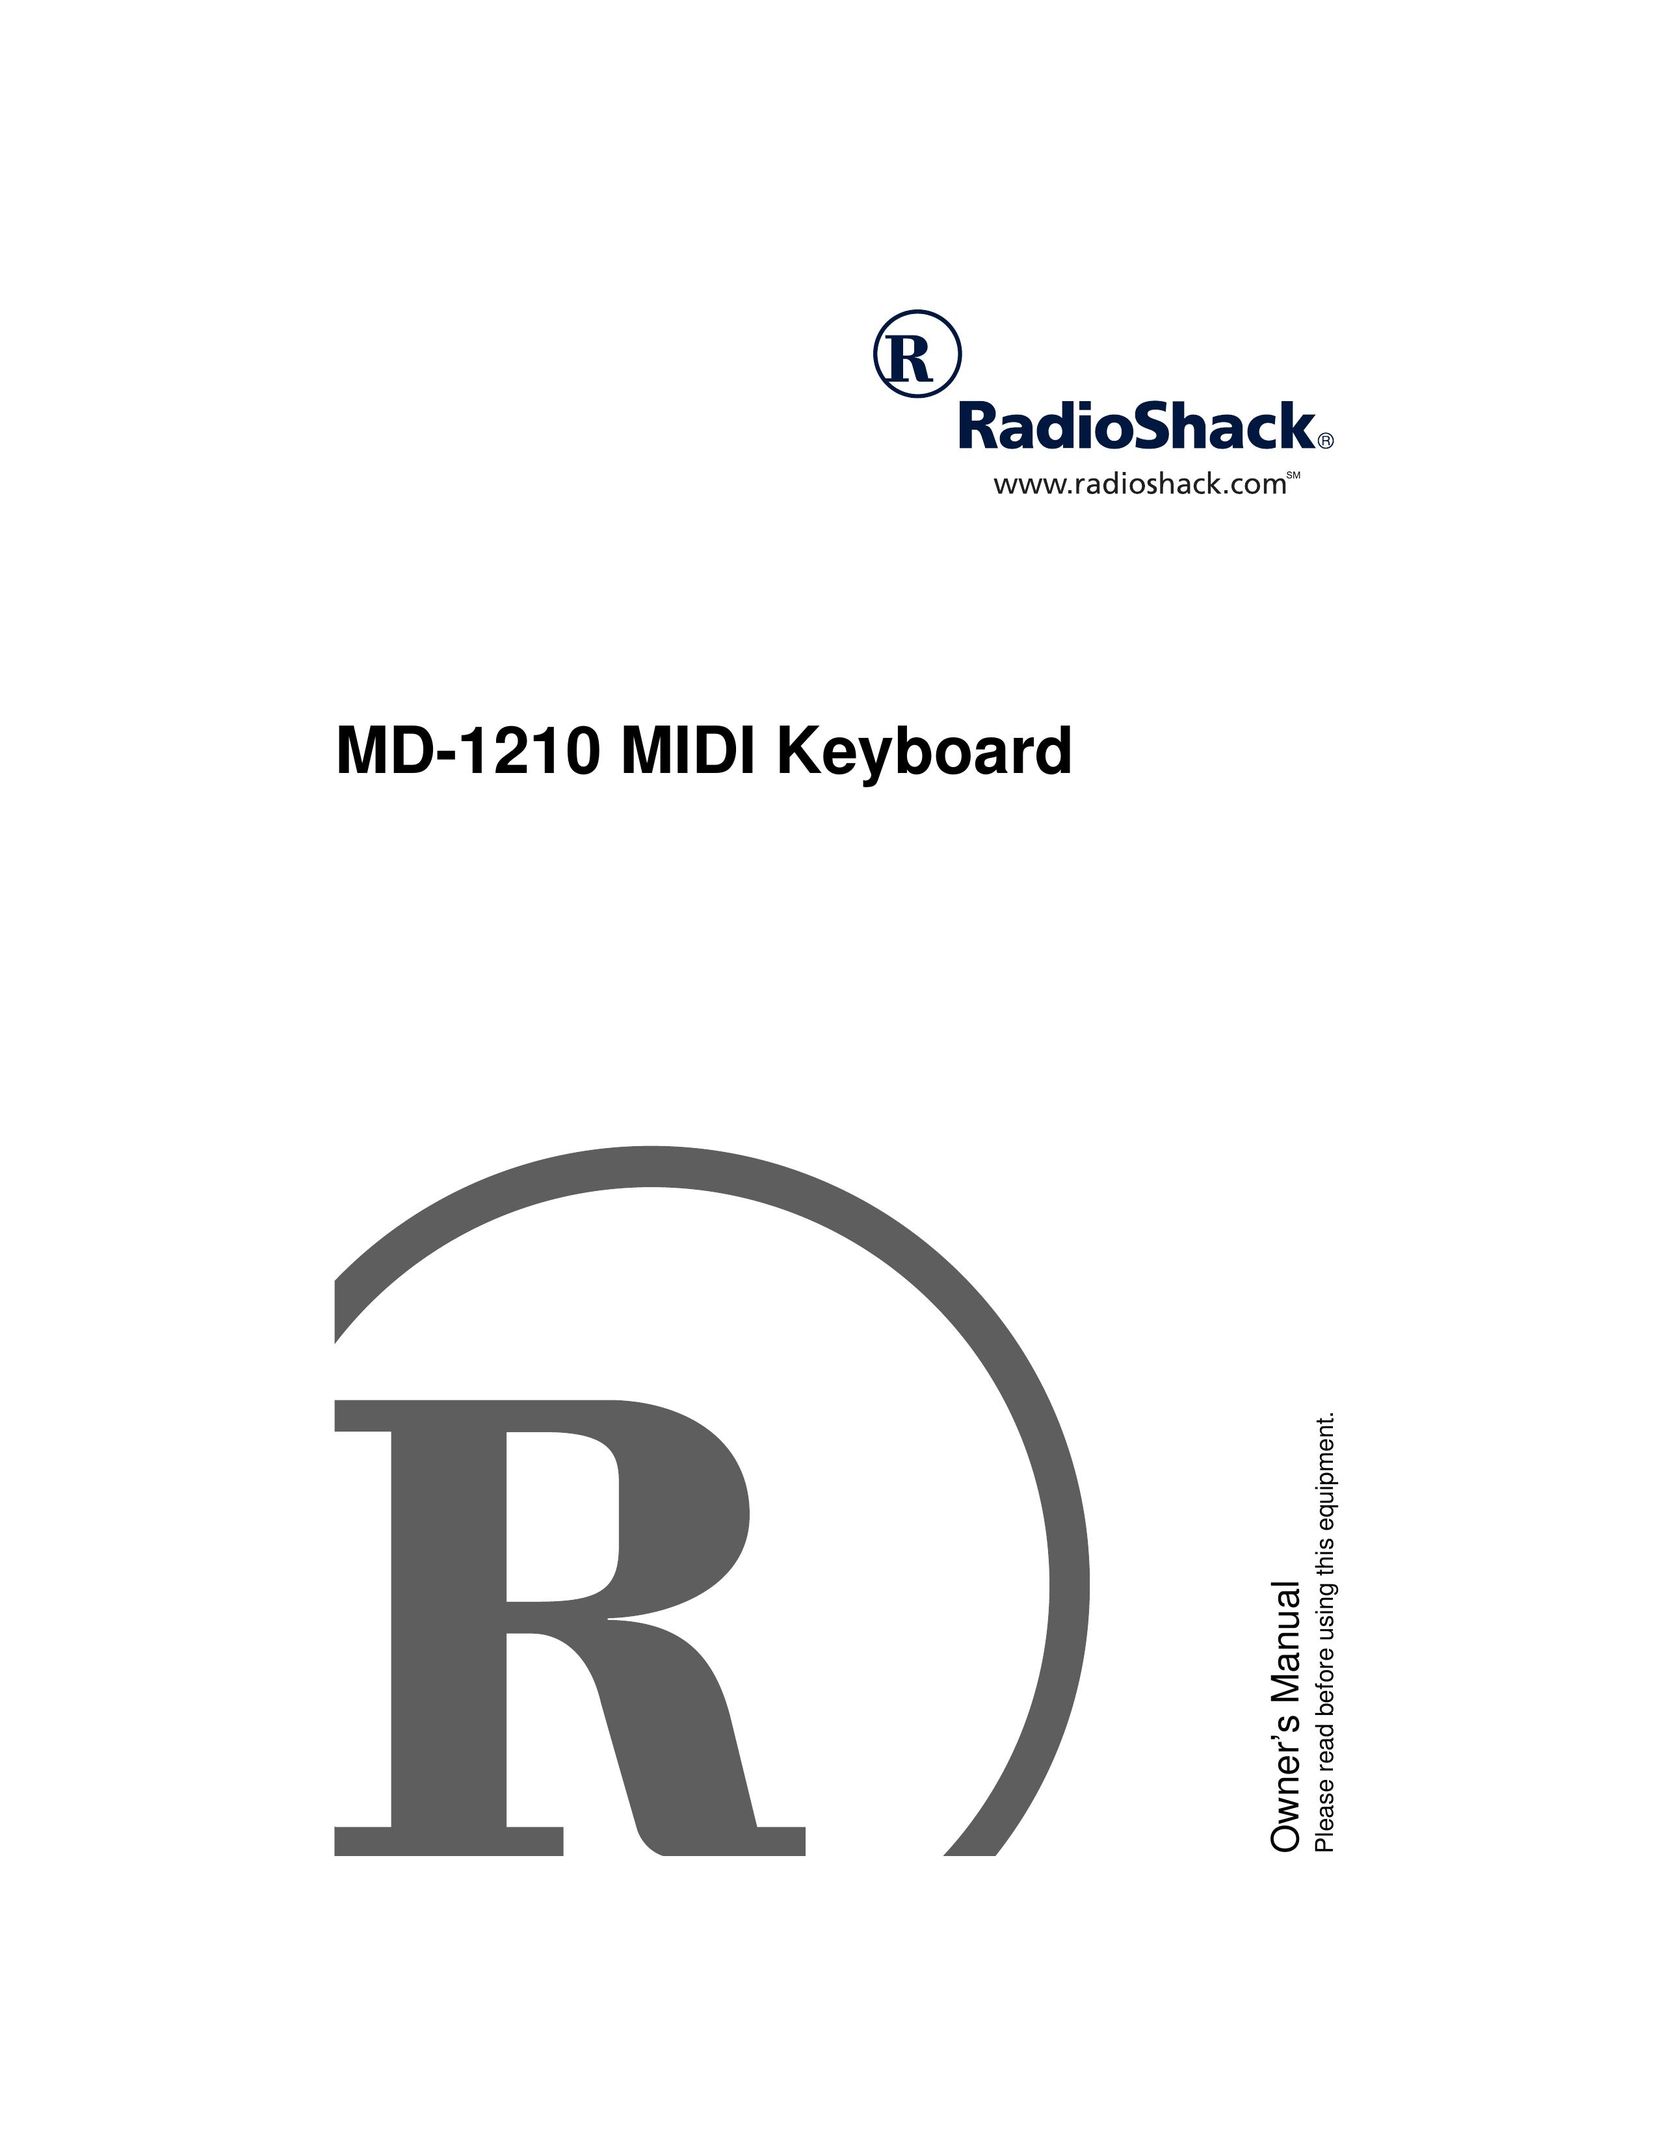 Radio Shack MD-1210 Video Game Keyboard User Manual